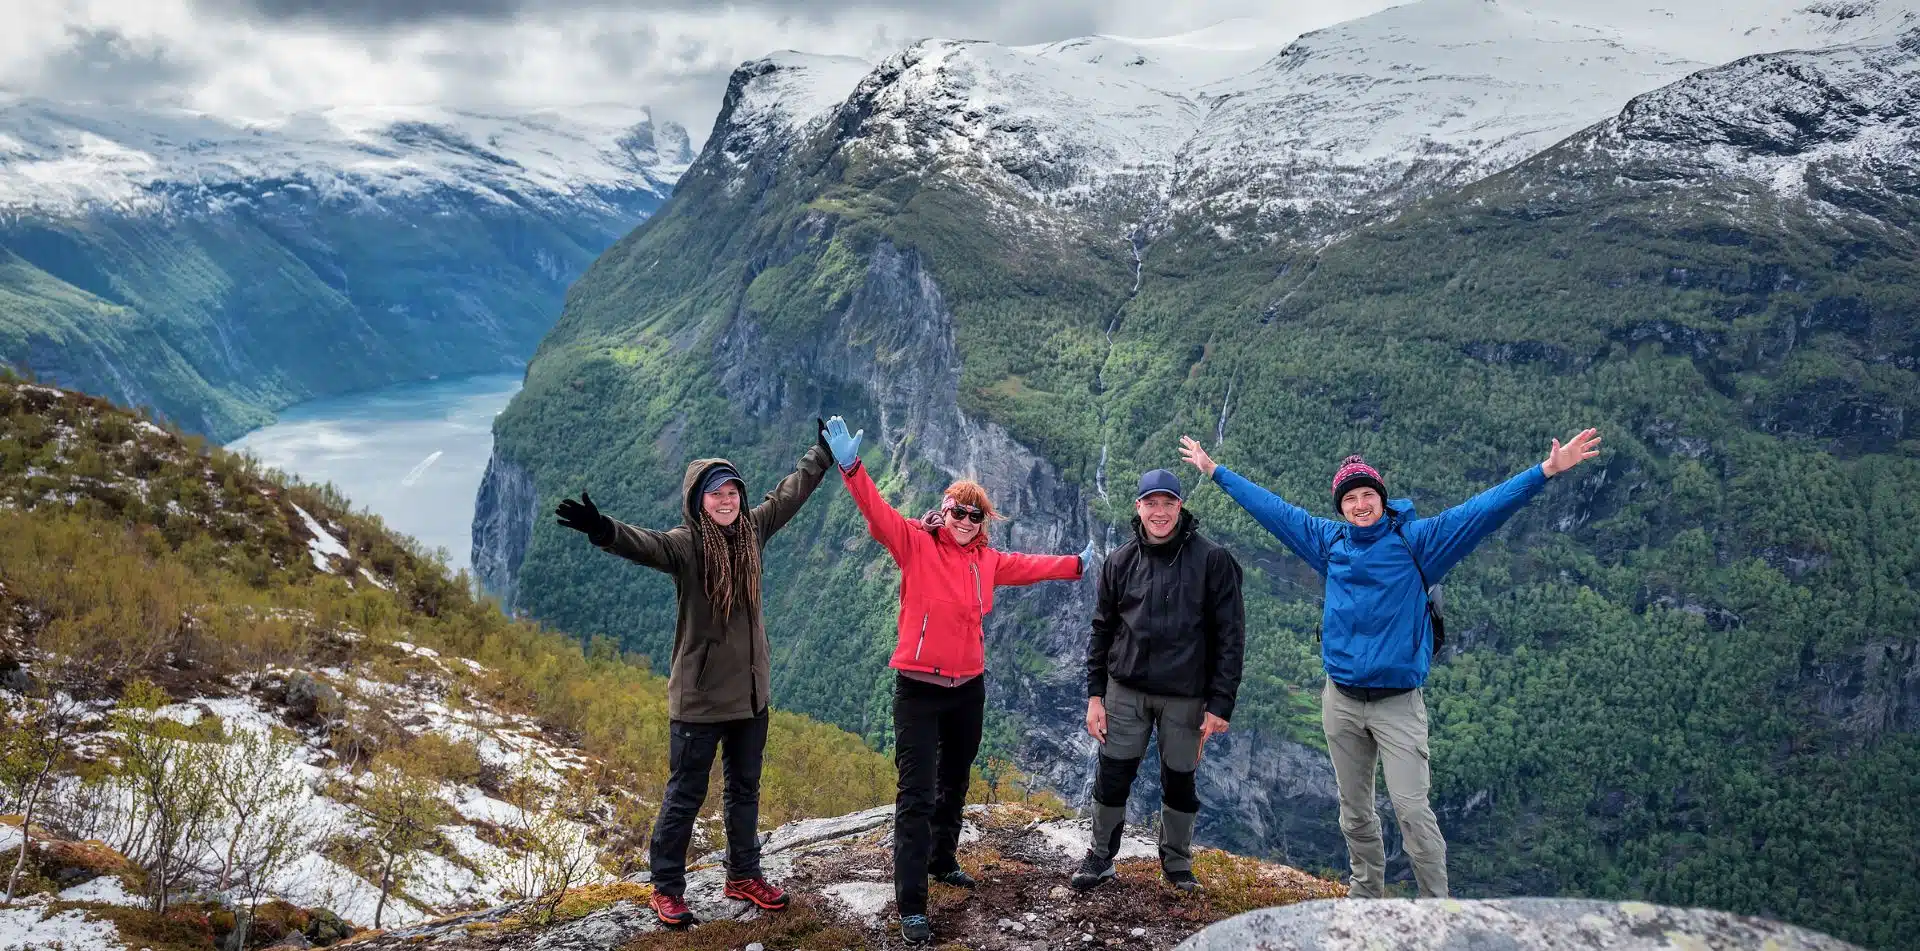 Travelers enjoying themselves in Norway